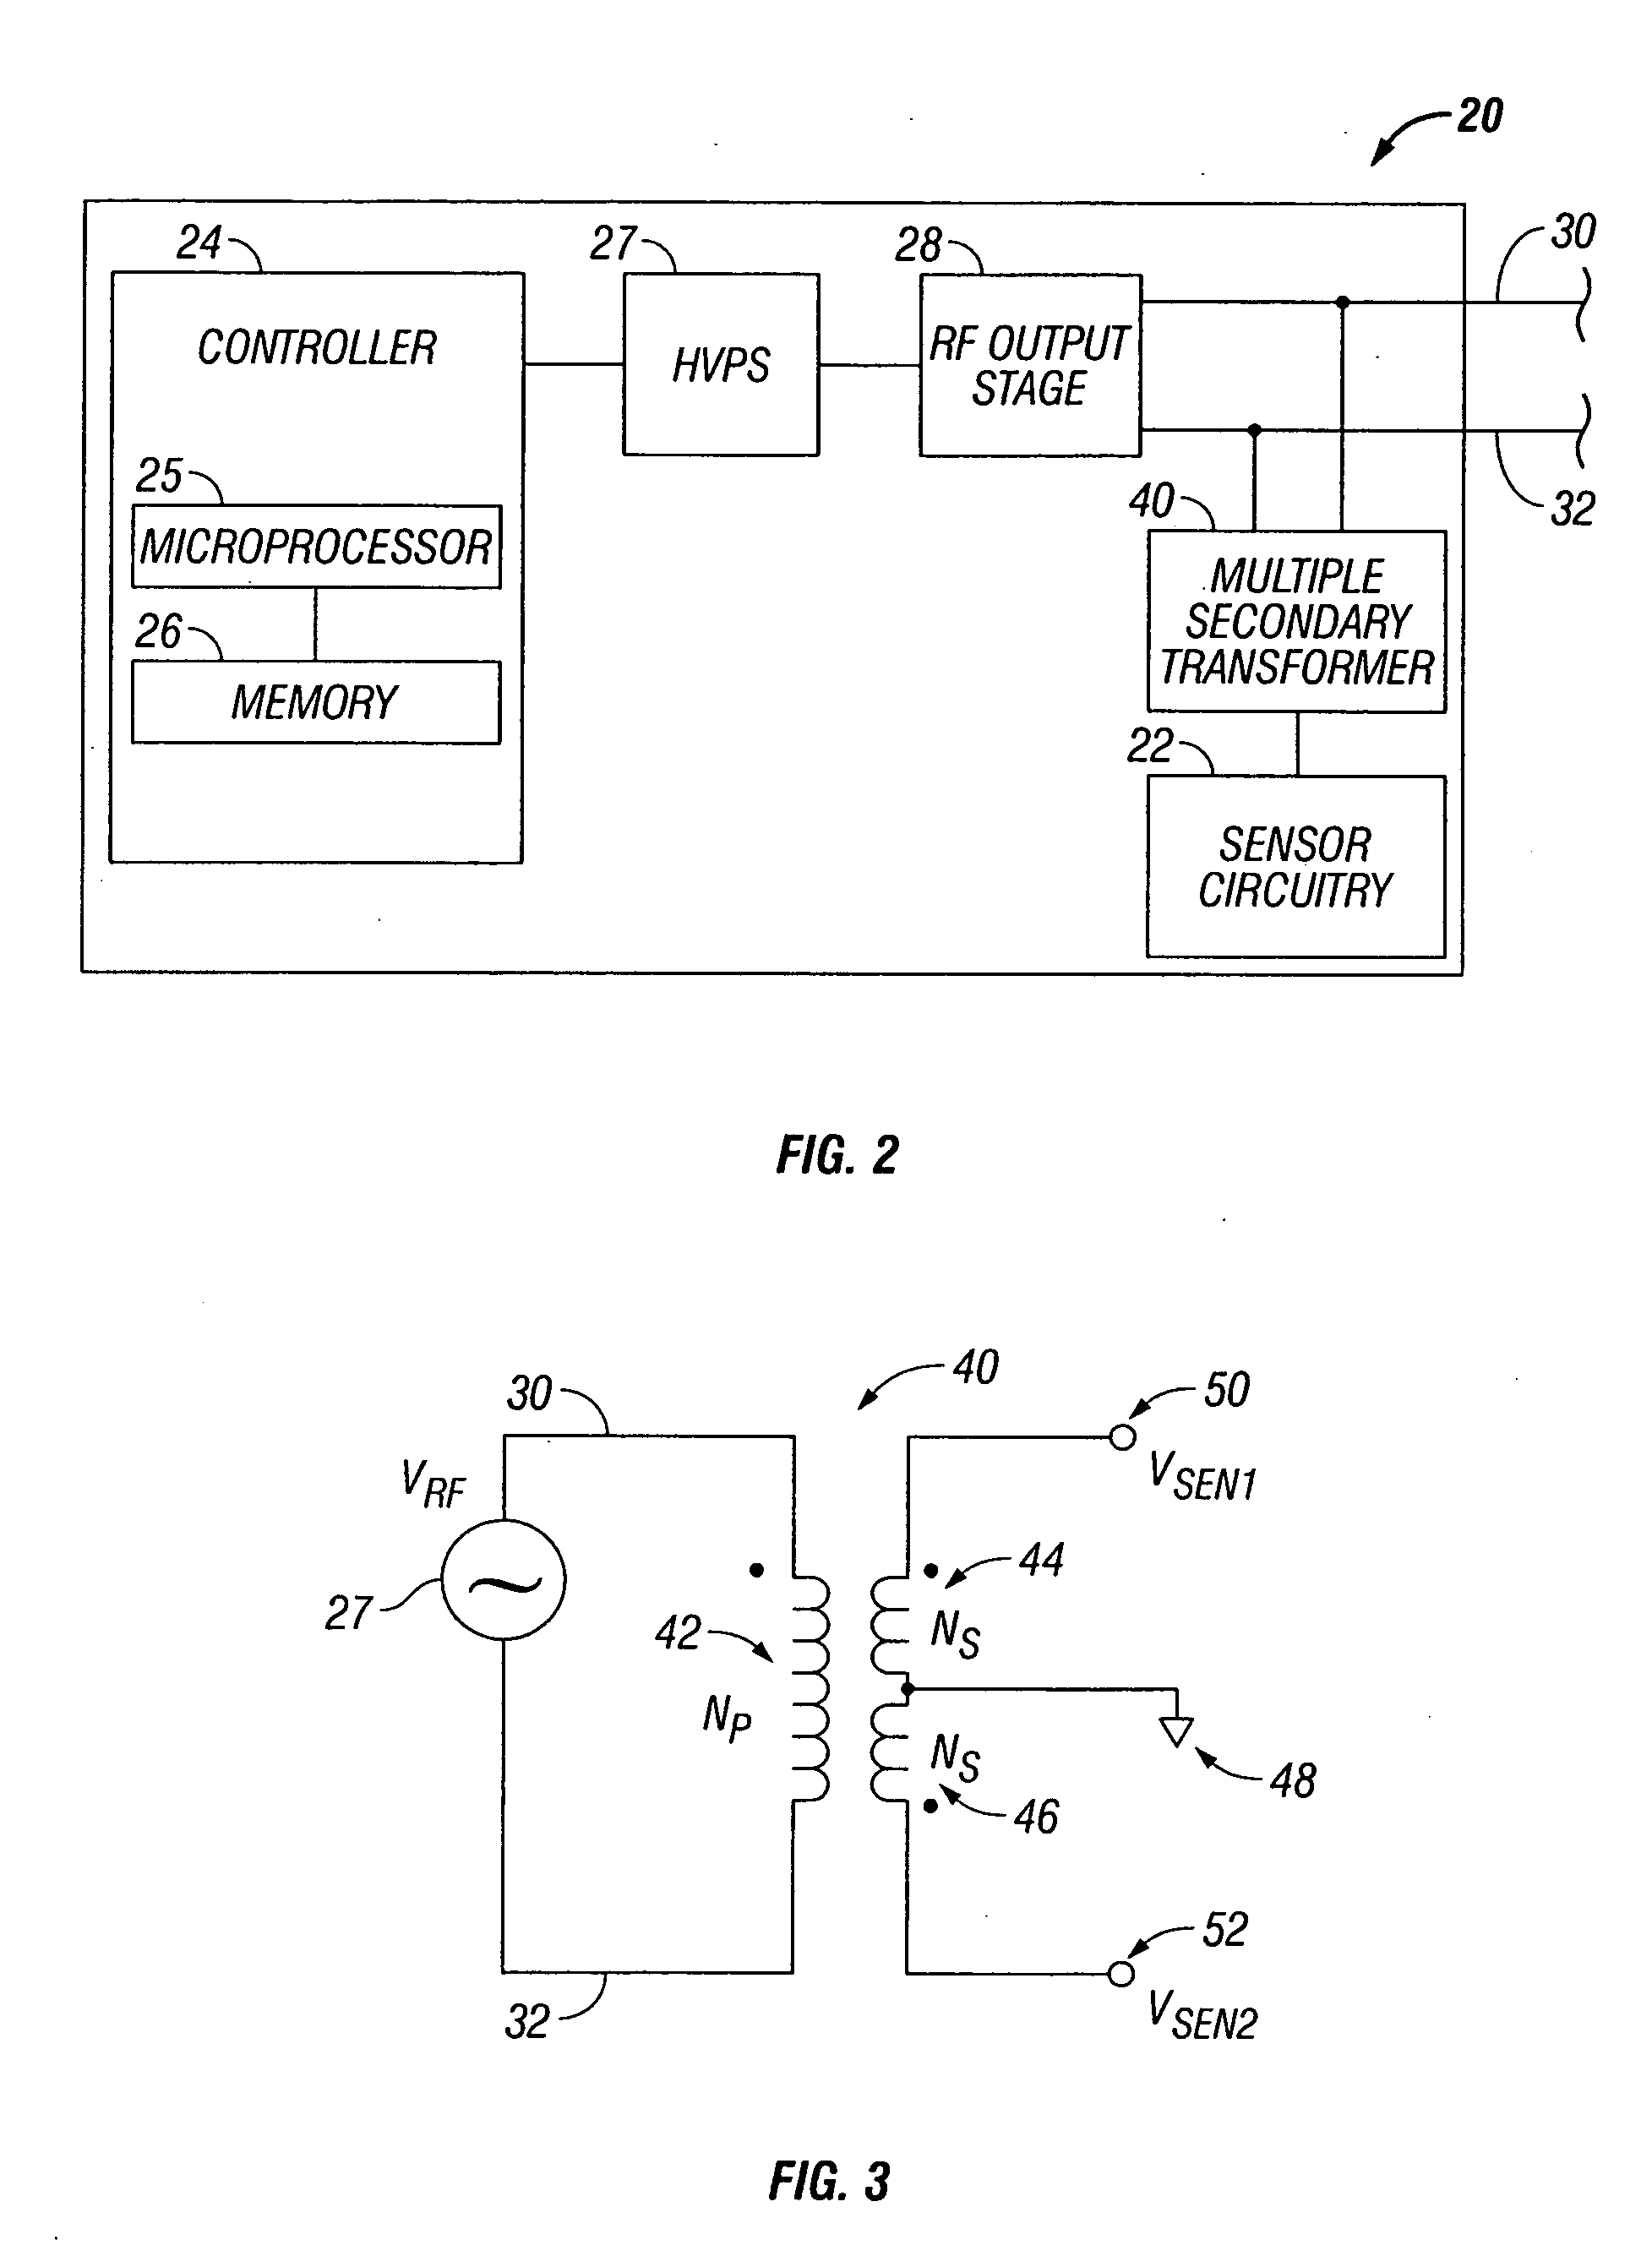 Transformer for RF voltage sensing